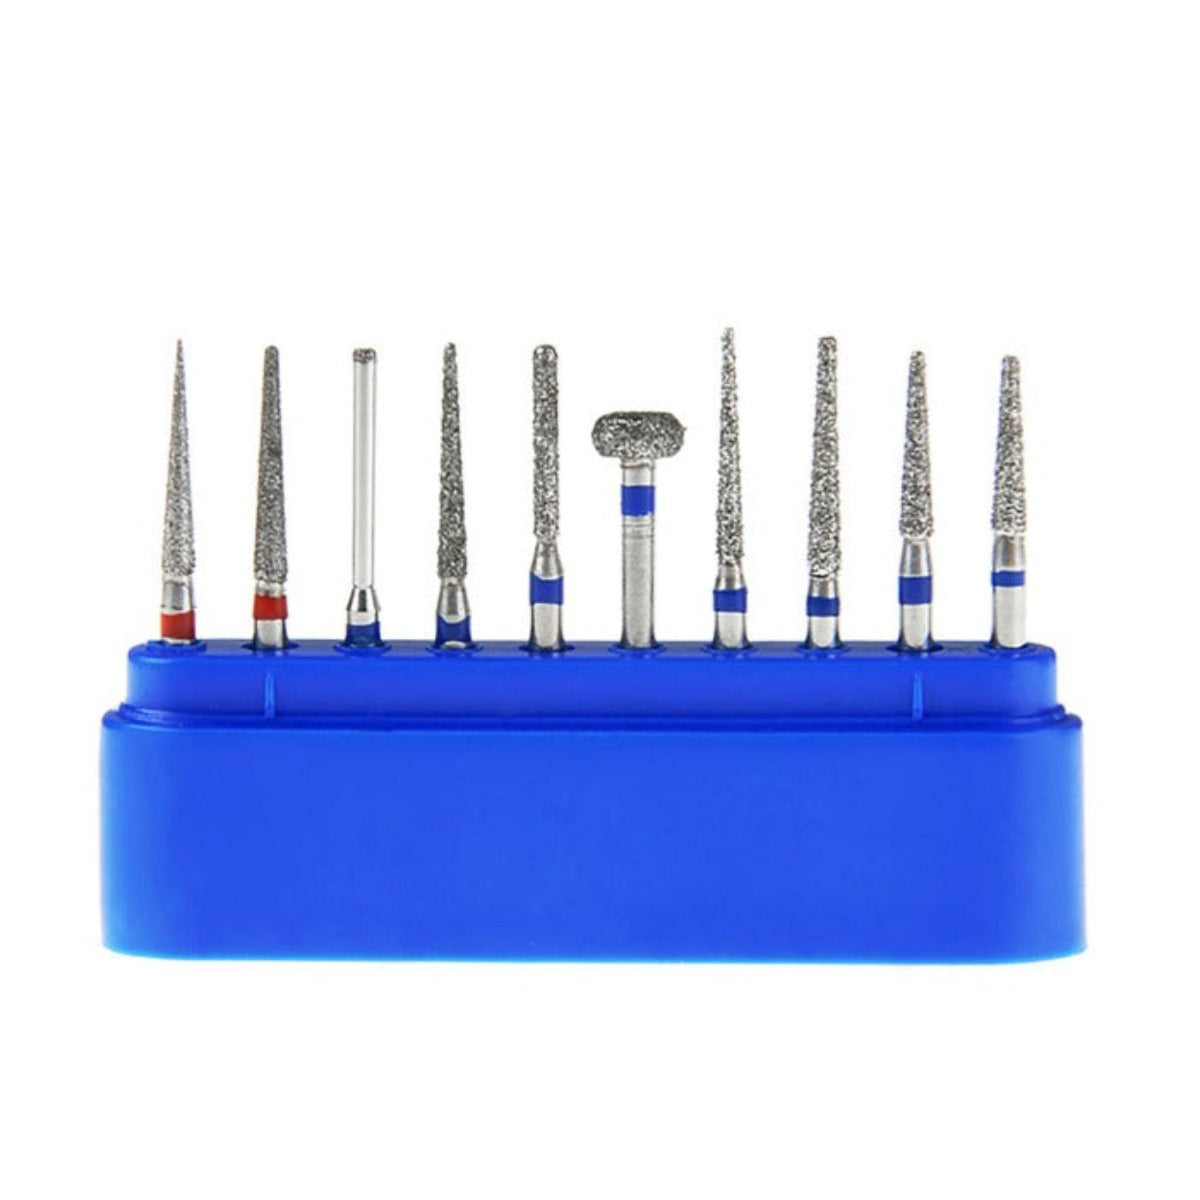 Dental Diamond Burs FG-101 For Crown Preparation Anterior Teeth Kit 10pcs/Kit - pairaydental.com